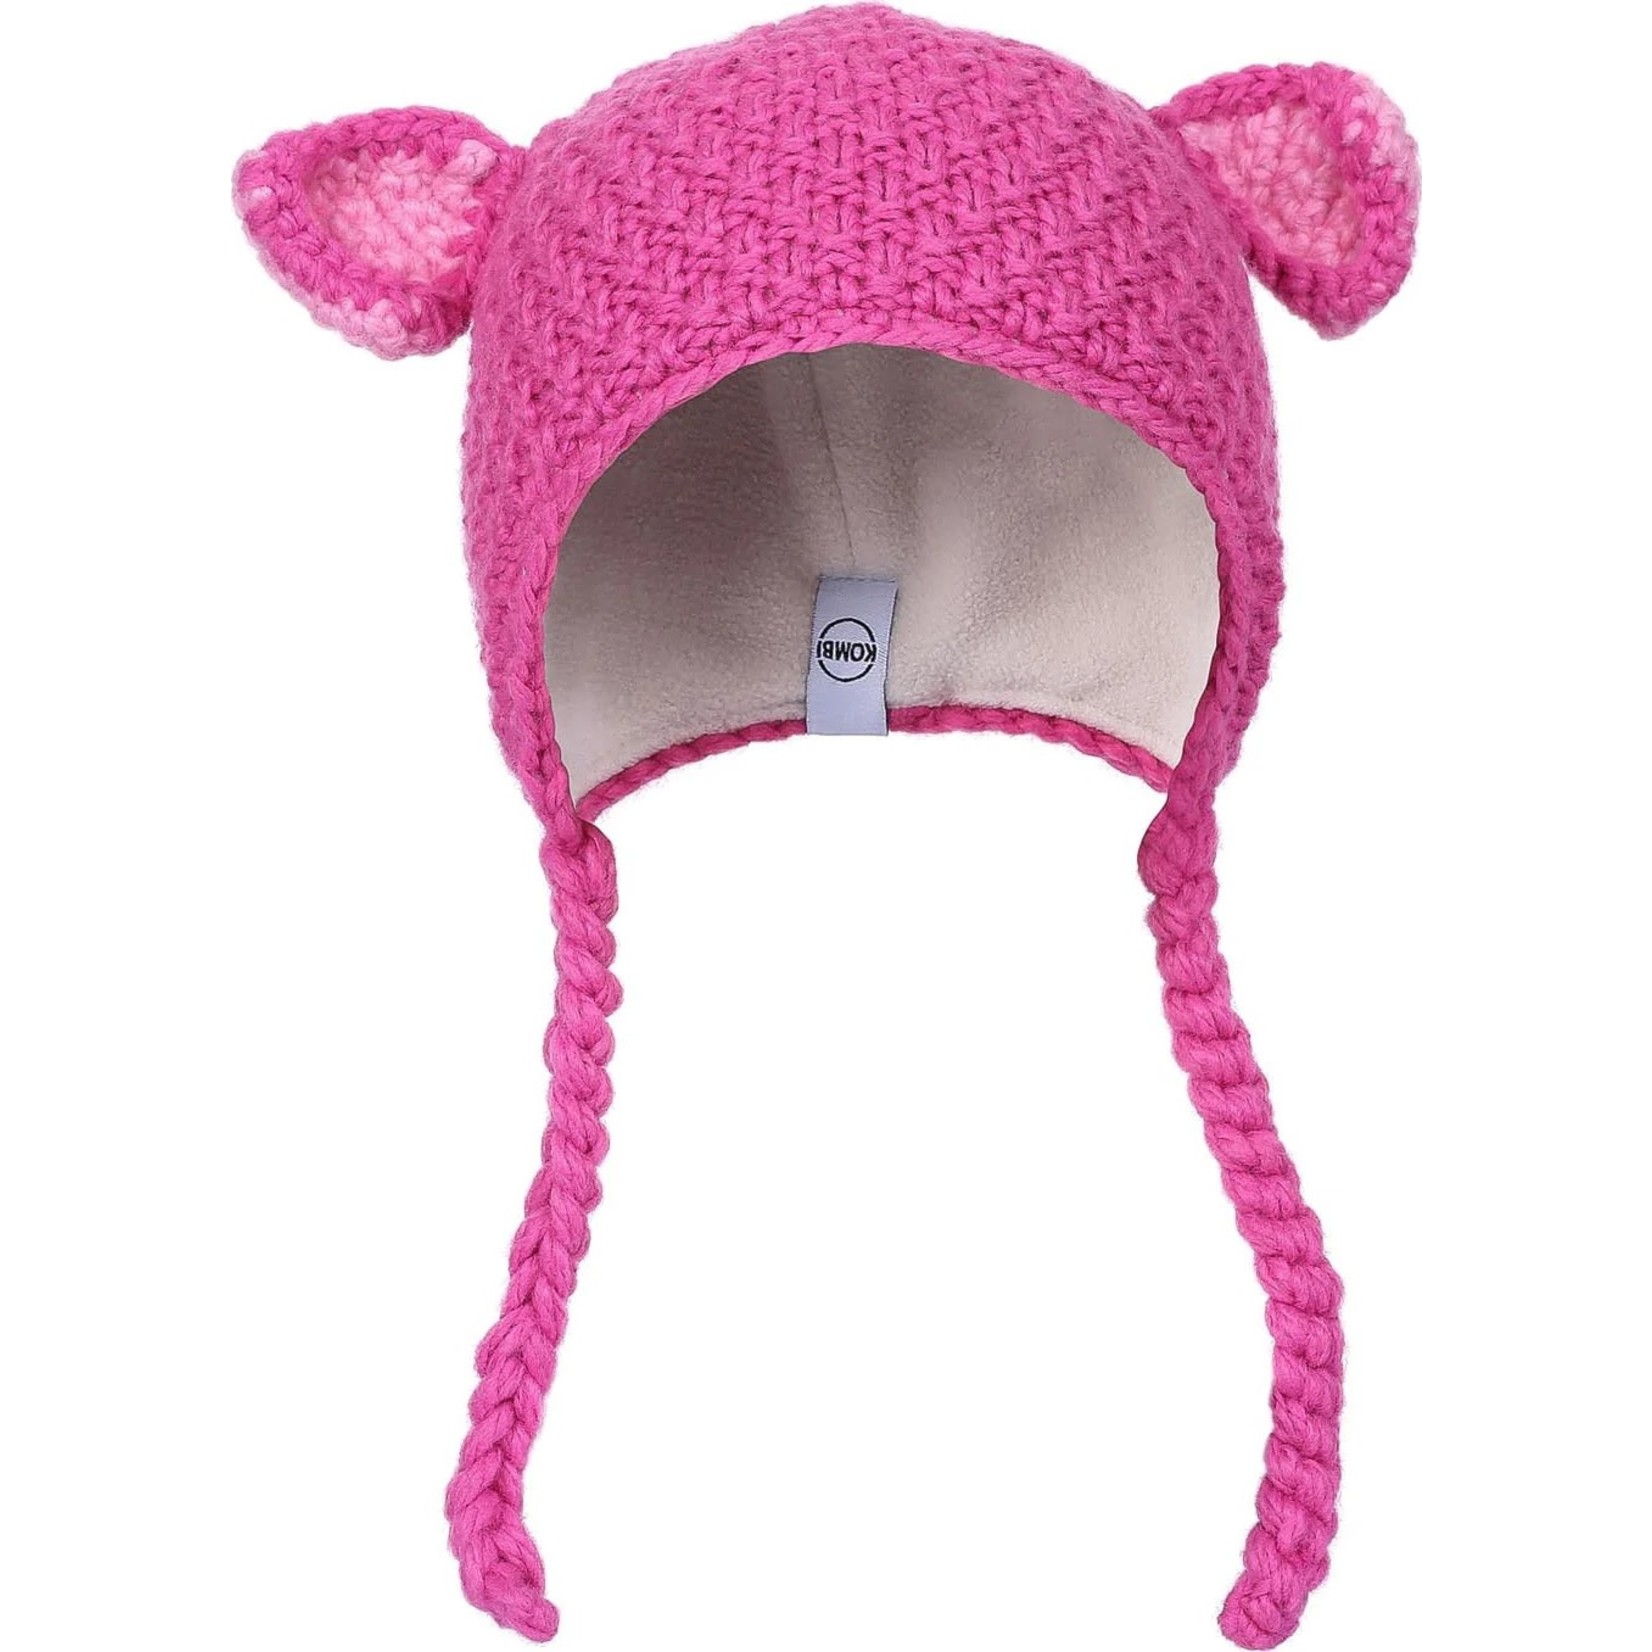 Kombi KOMBI - 'Baby animal' Lined Knit Winter Hat (Infant) - Pink